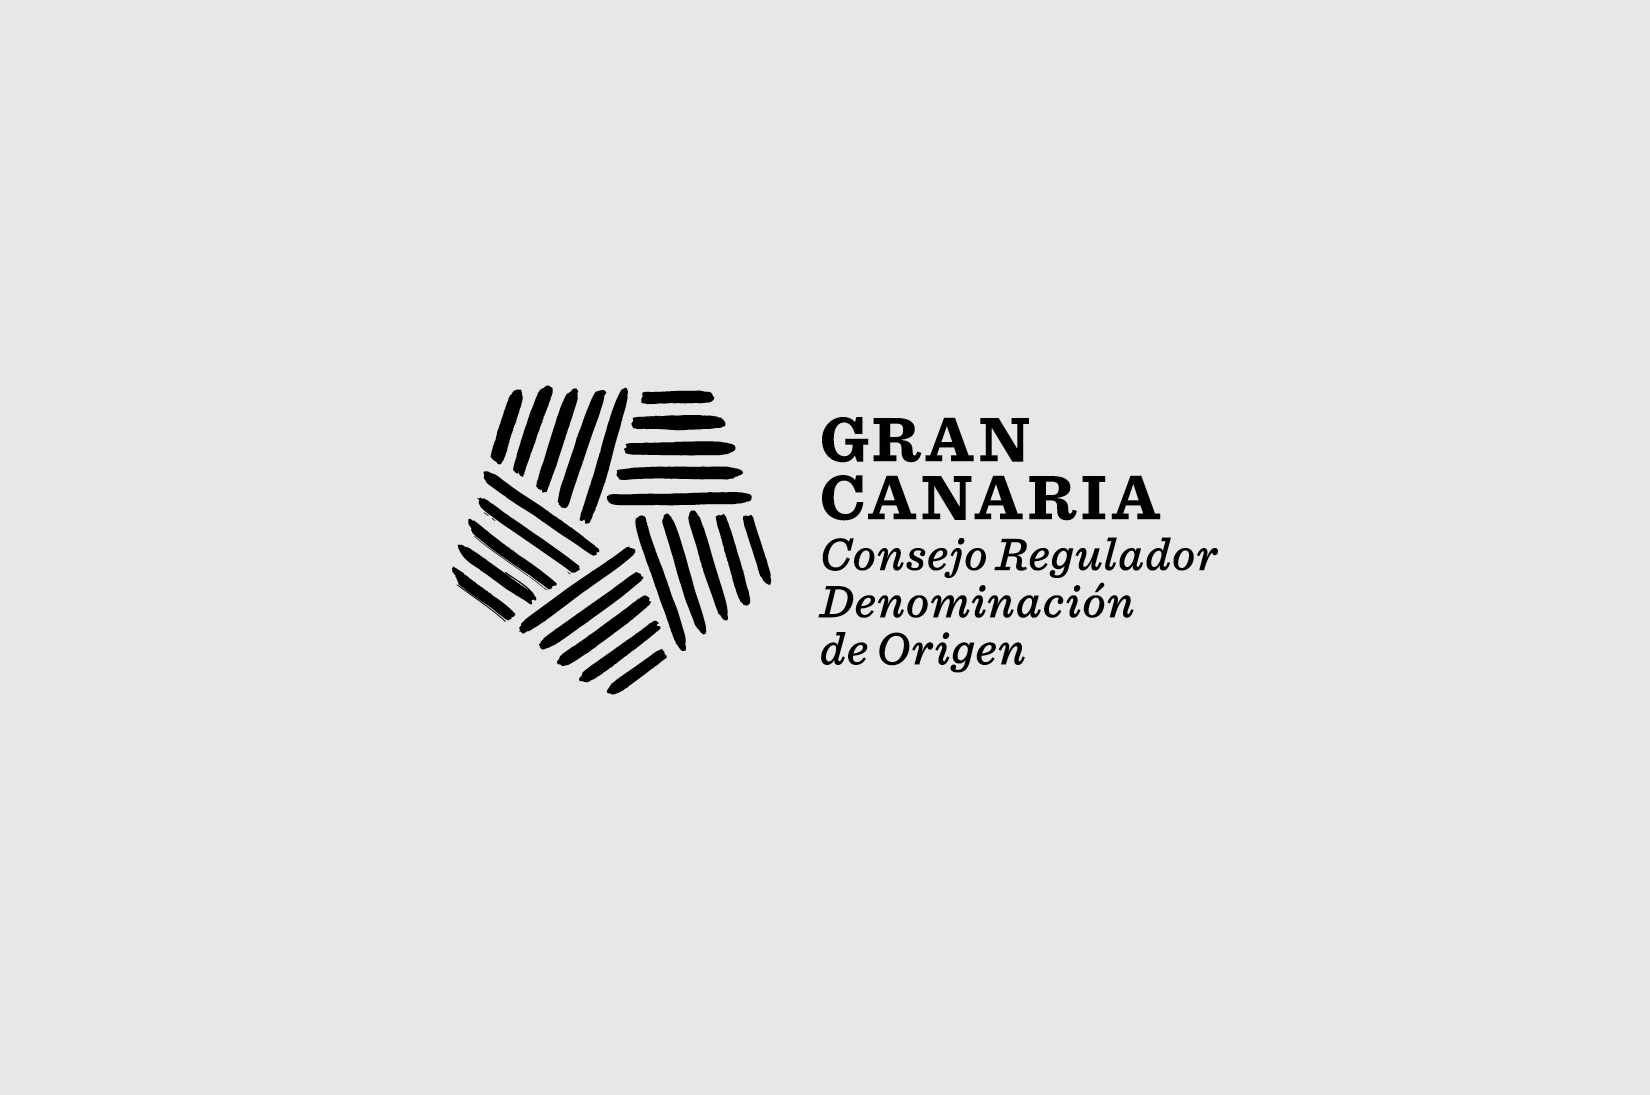 Designation of Origen Gran Canaria